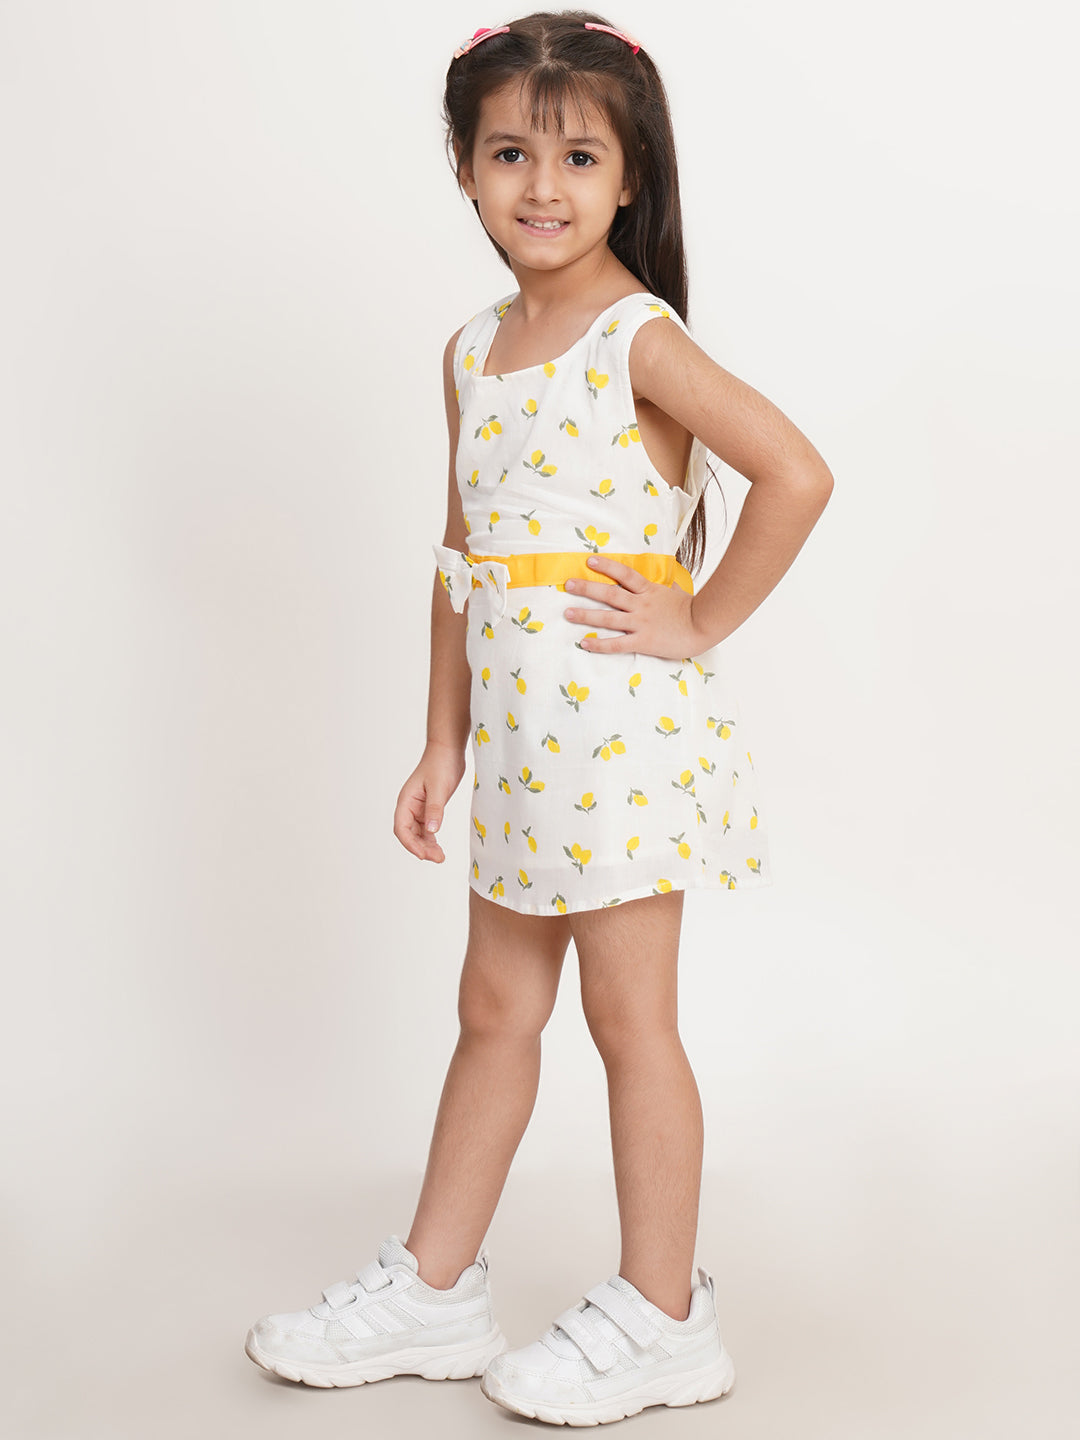 CREATIVE KID'S Girl White & Yellow Fruit Print Cotton A-Line Dress